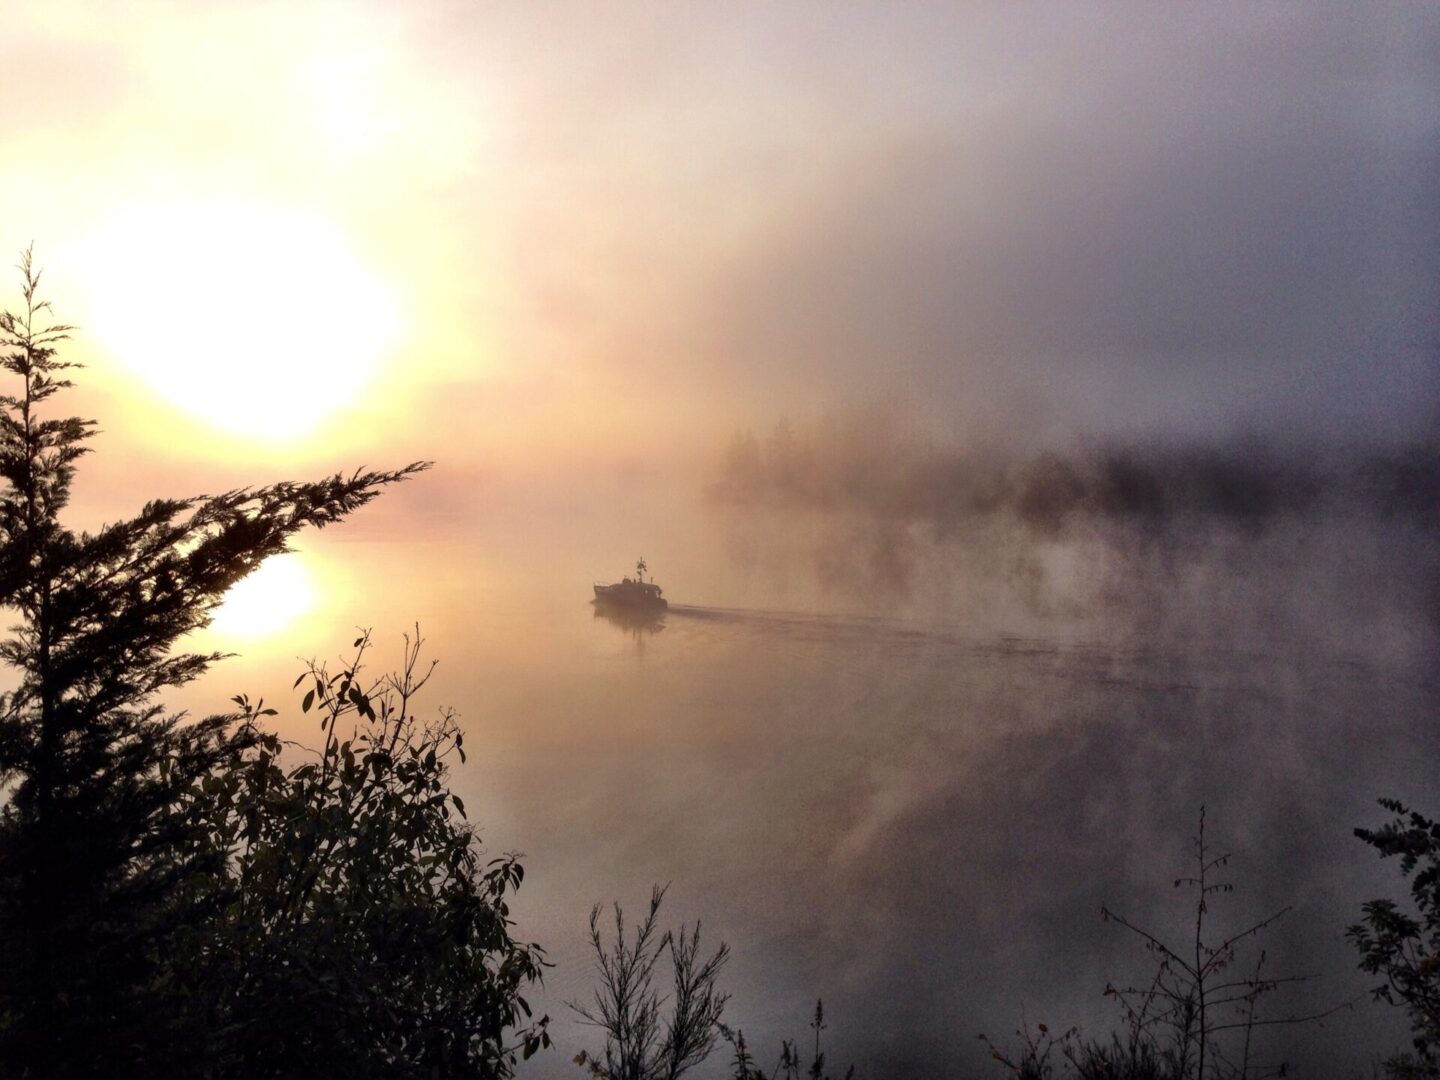 Boat in the fog at sunrise